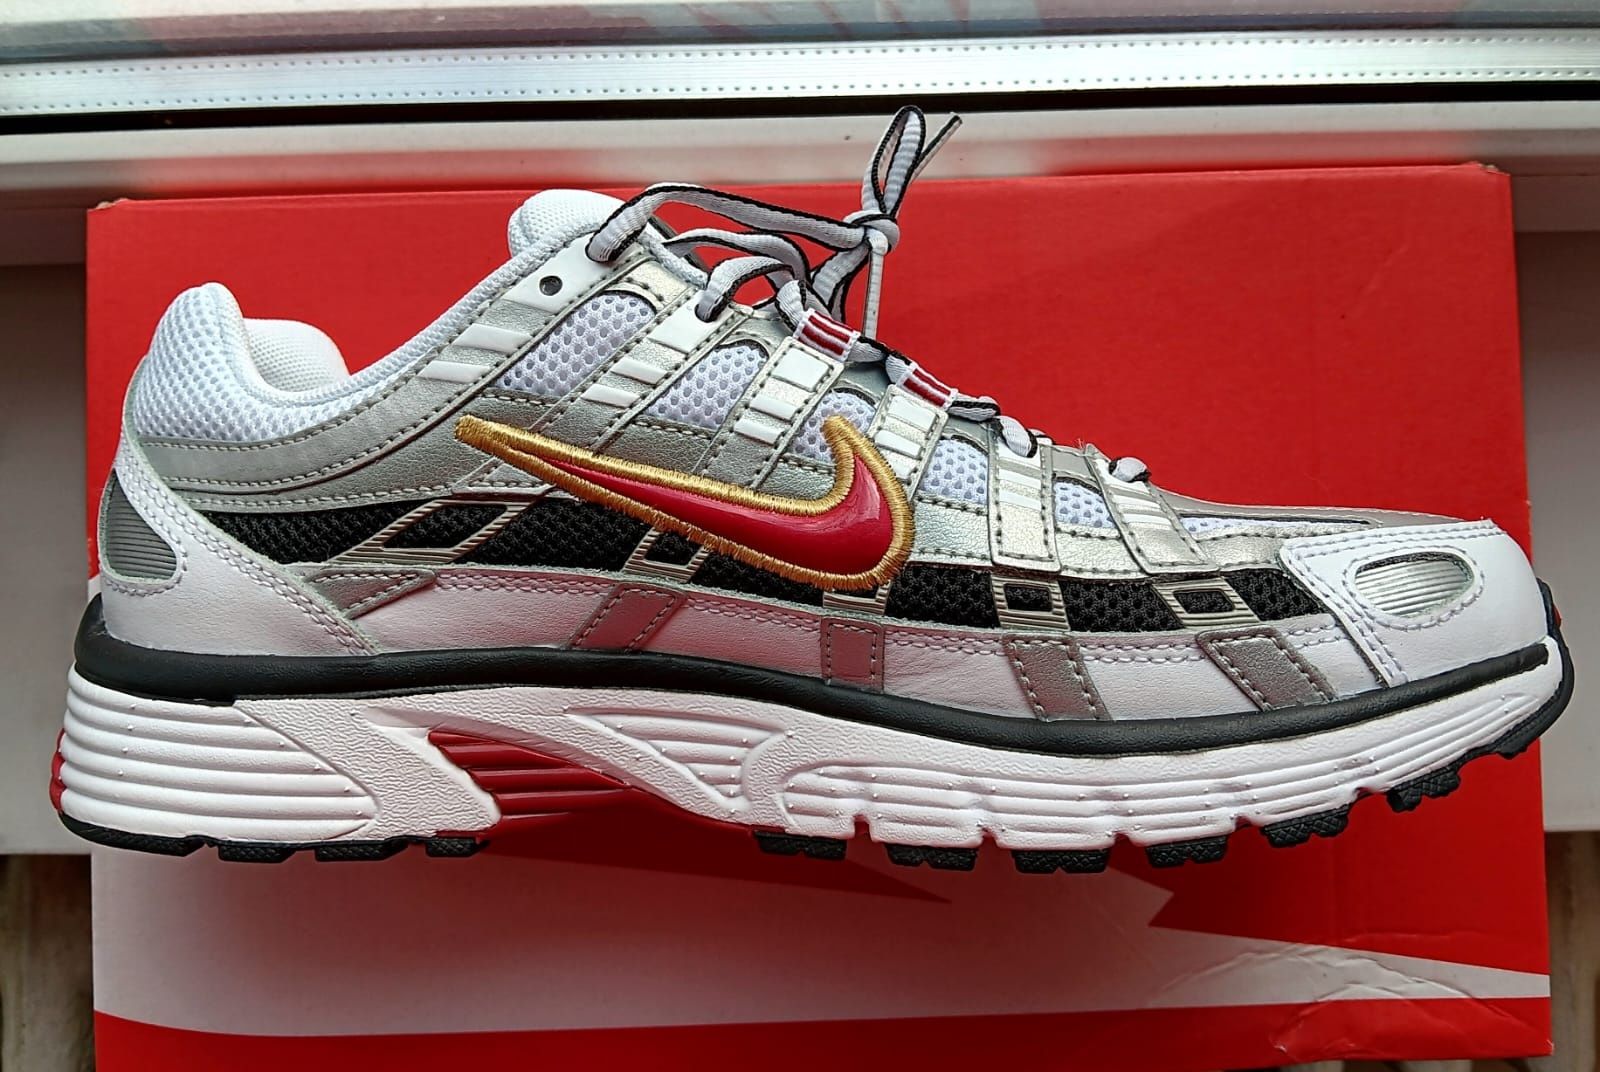 Papuci Nike p-6000